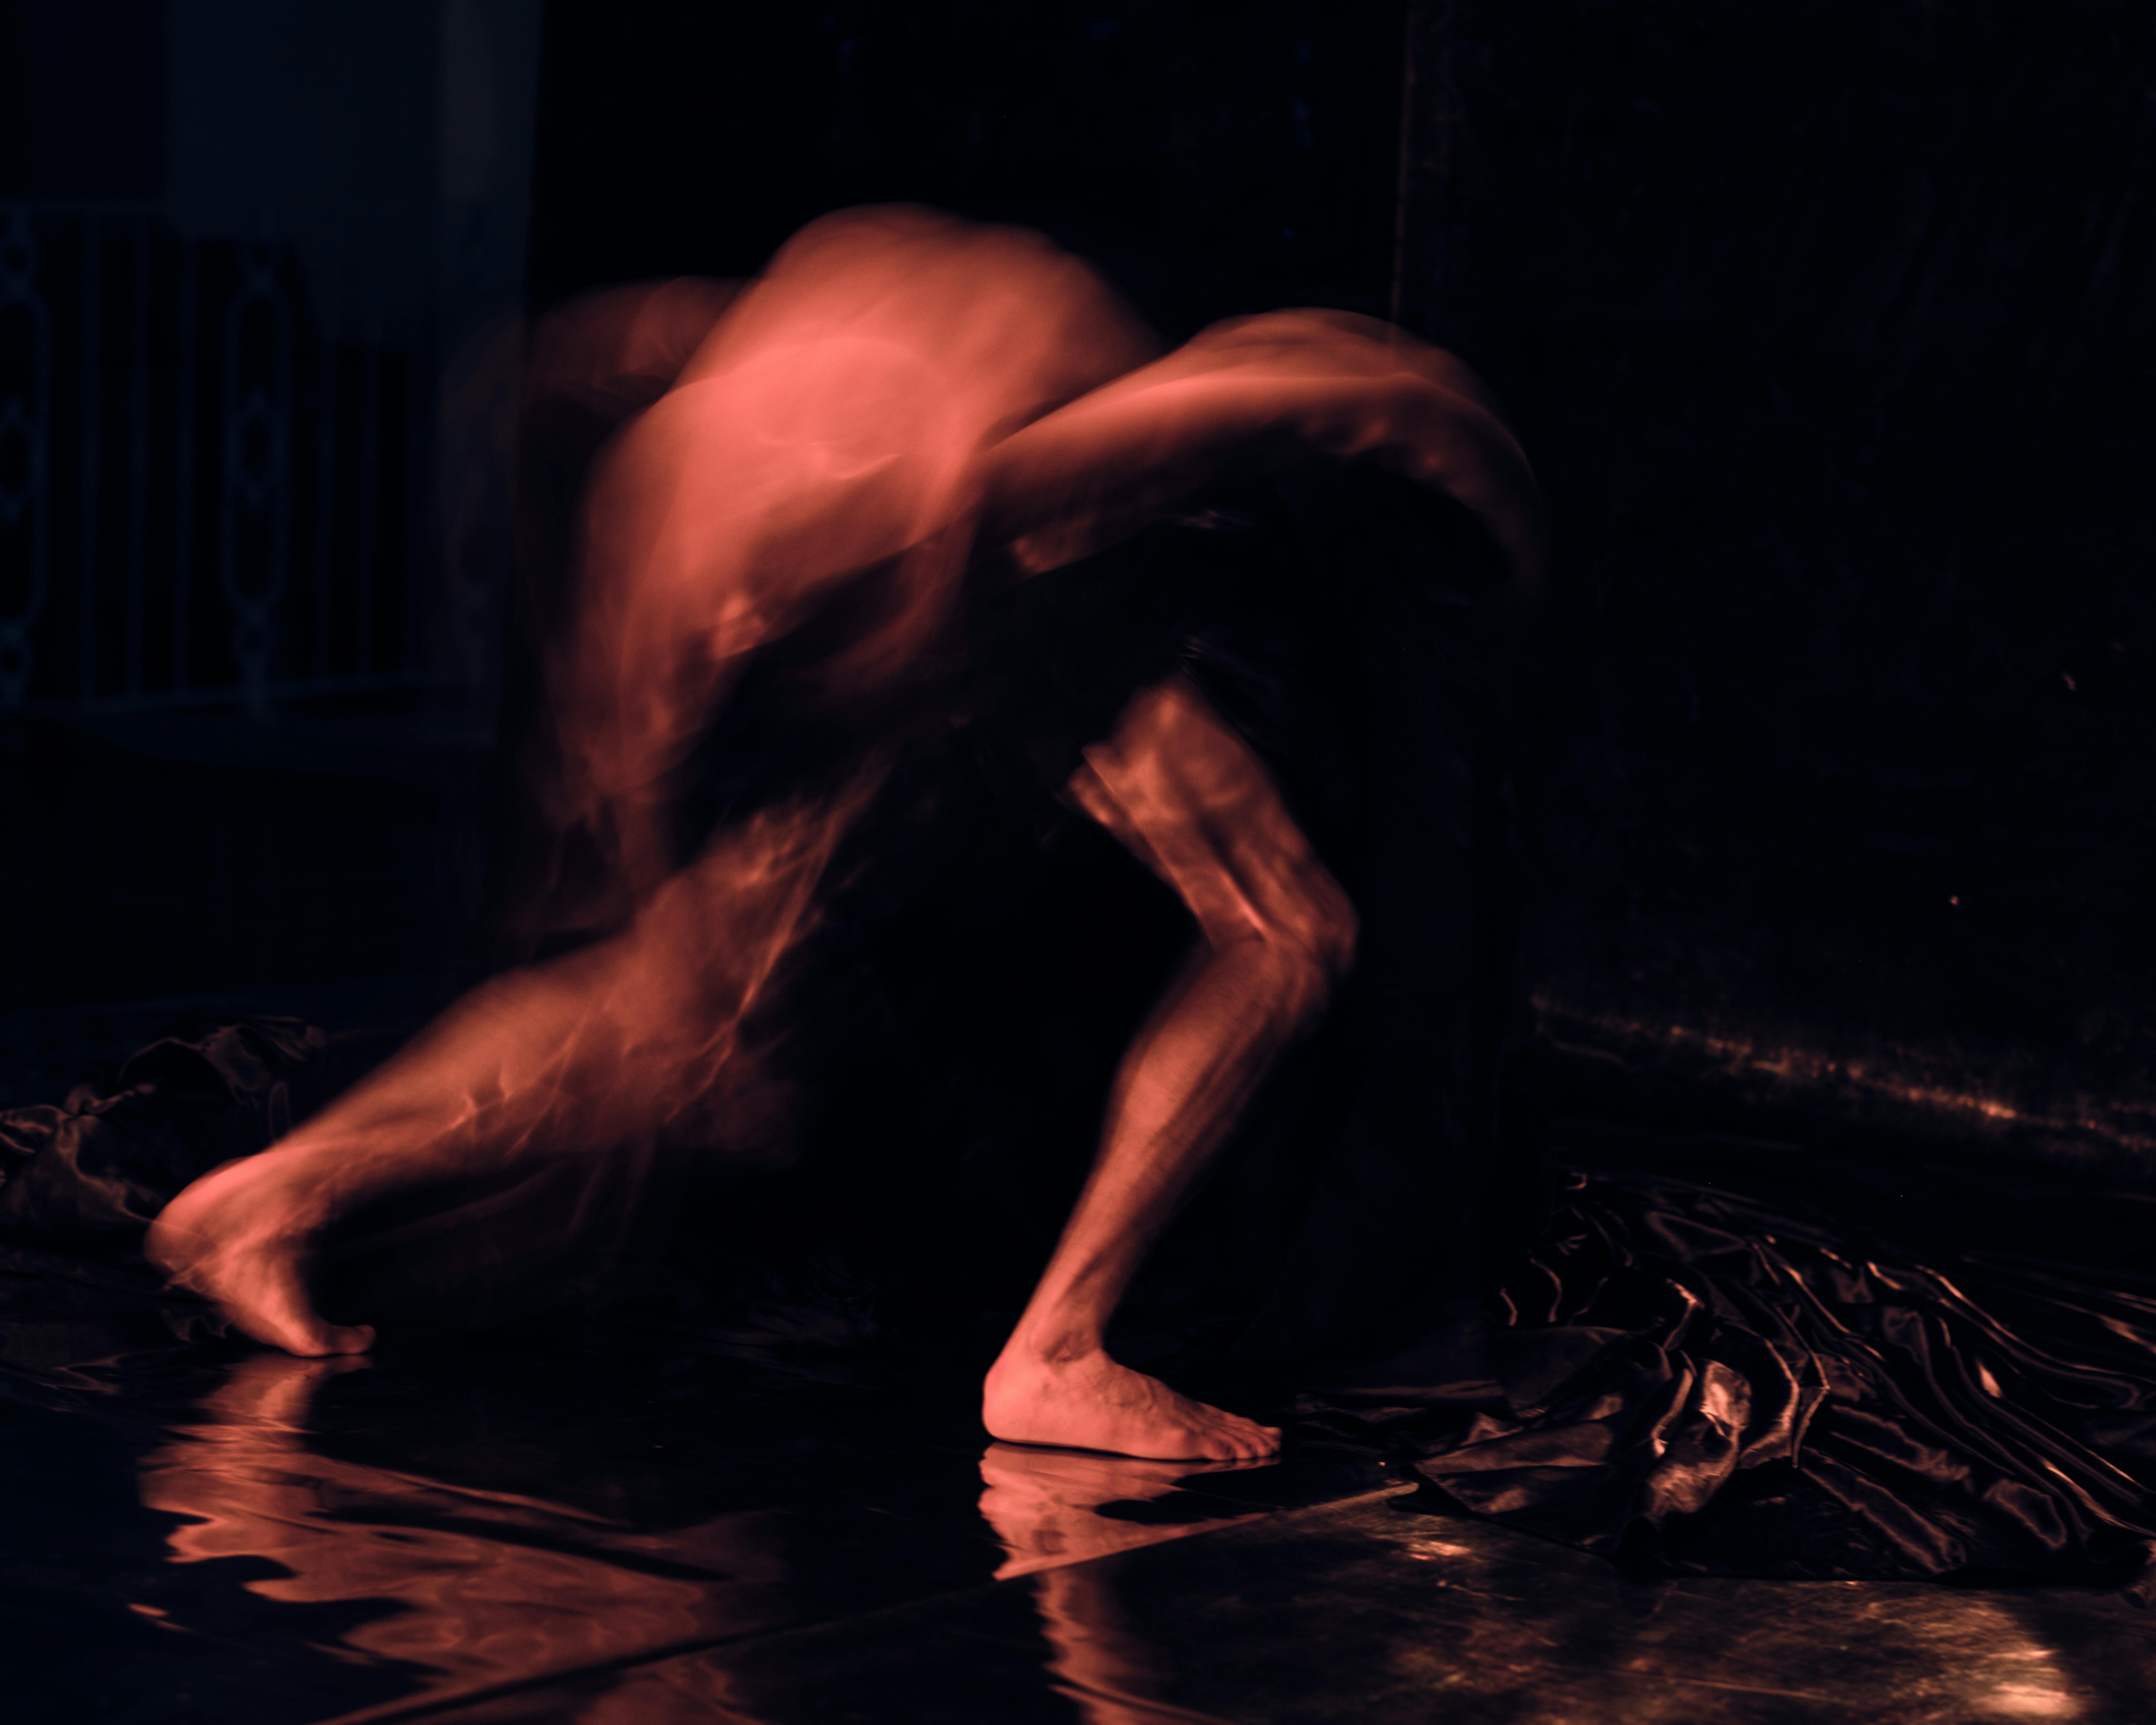 Blurred body in motion, torso facing downward against dark background.